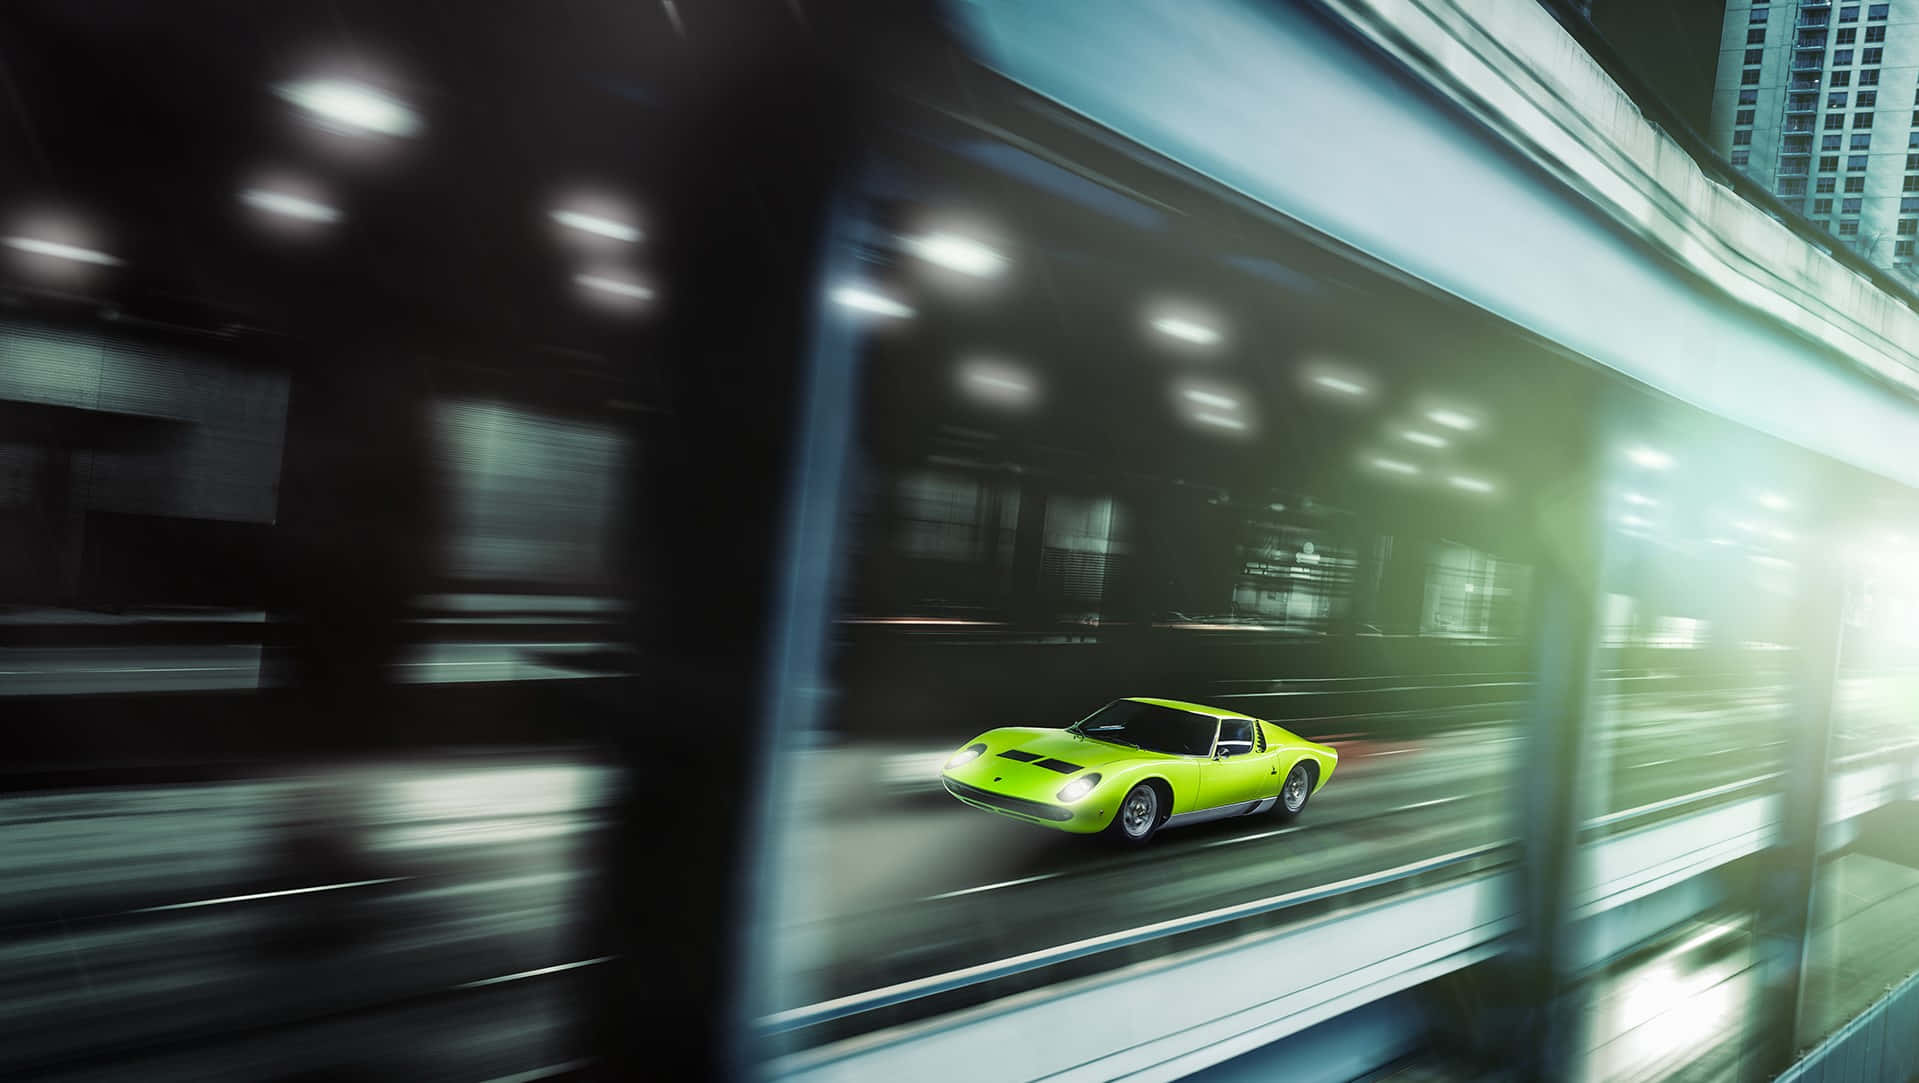 Stunning Lamborghini Miura in High Definition Wallpaper